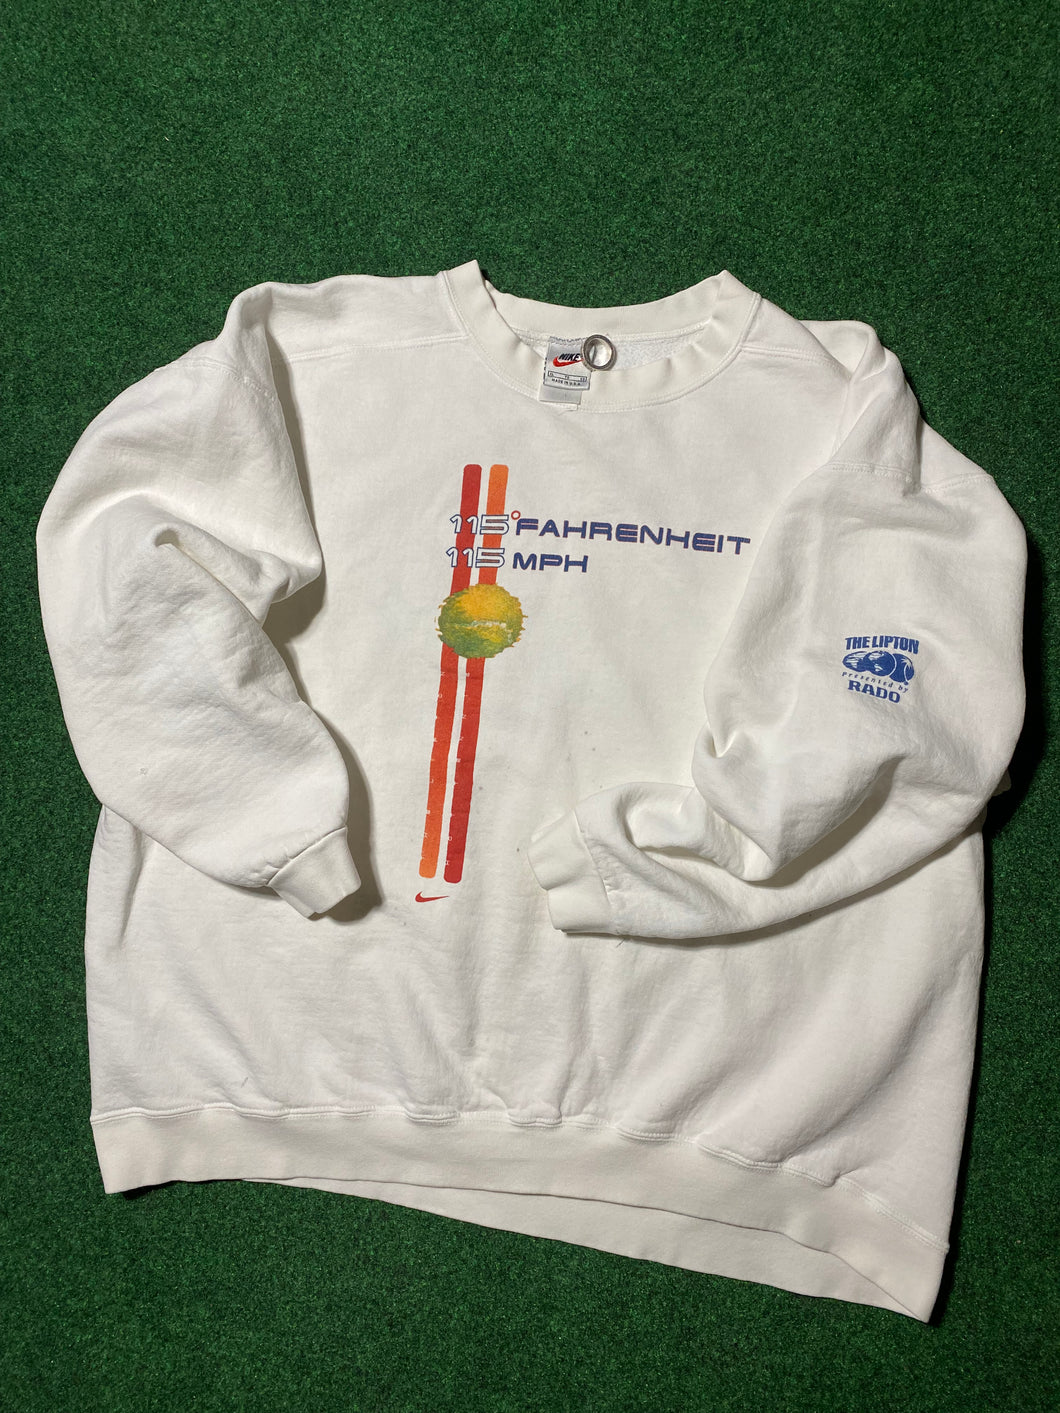 Vintage Nike Hot Tennis 1990’s Sweatshirt - L/XL